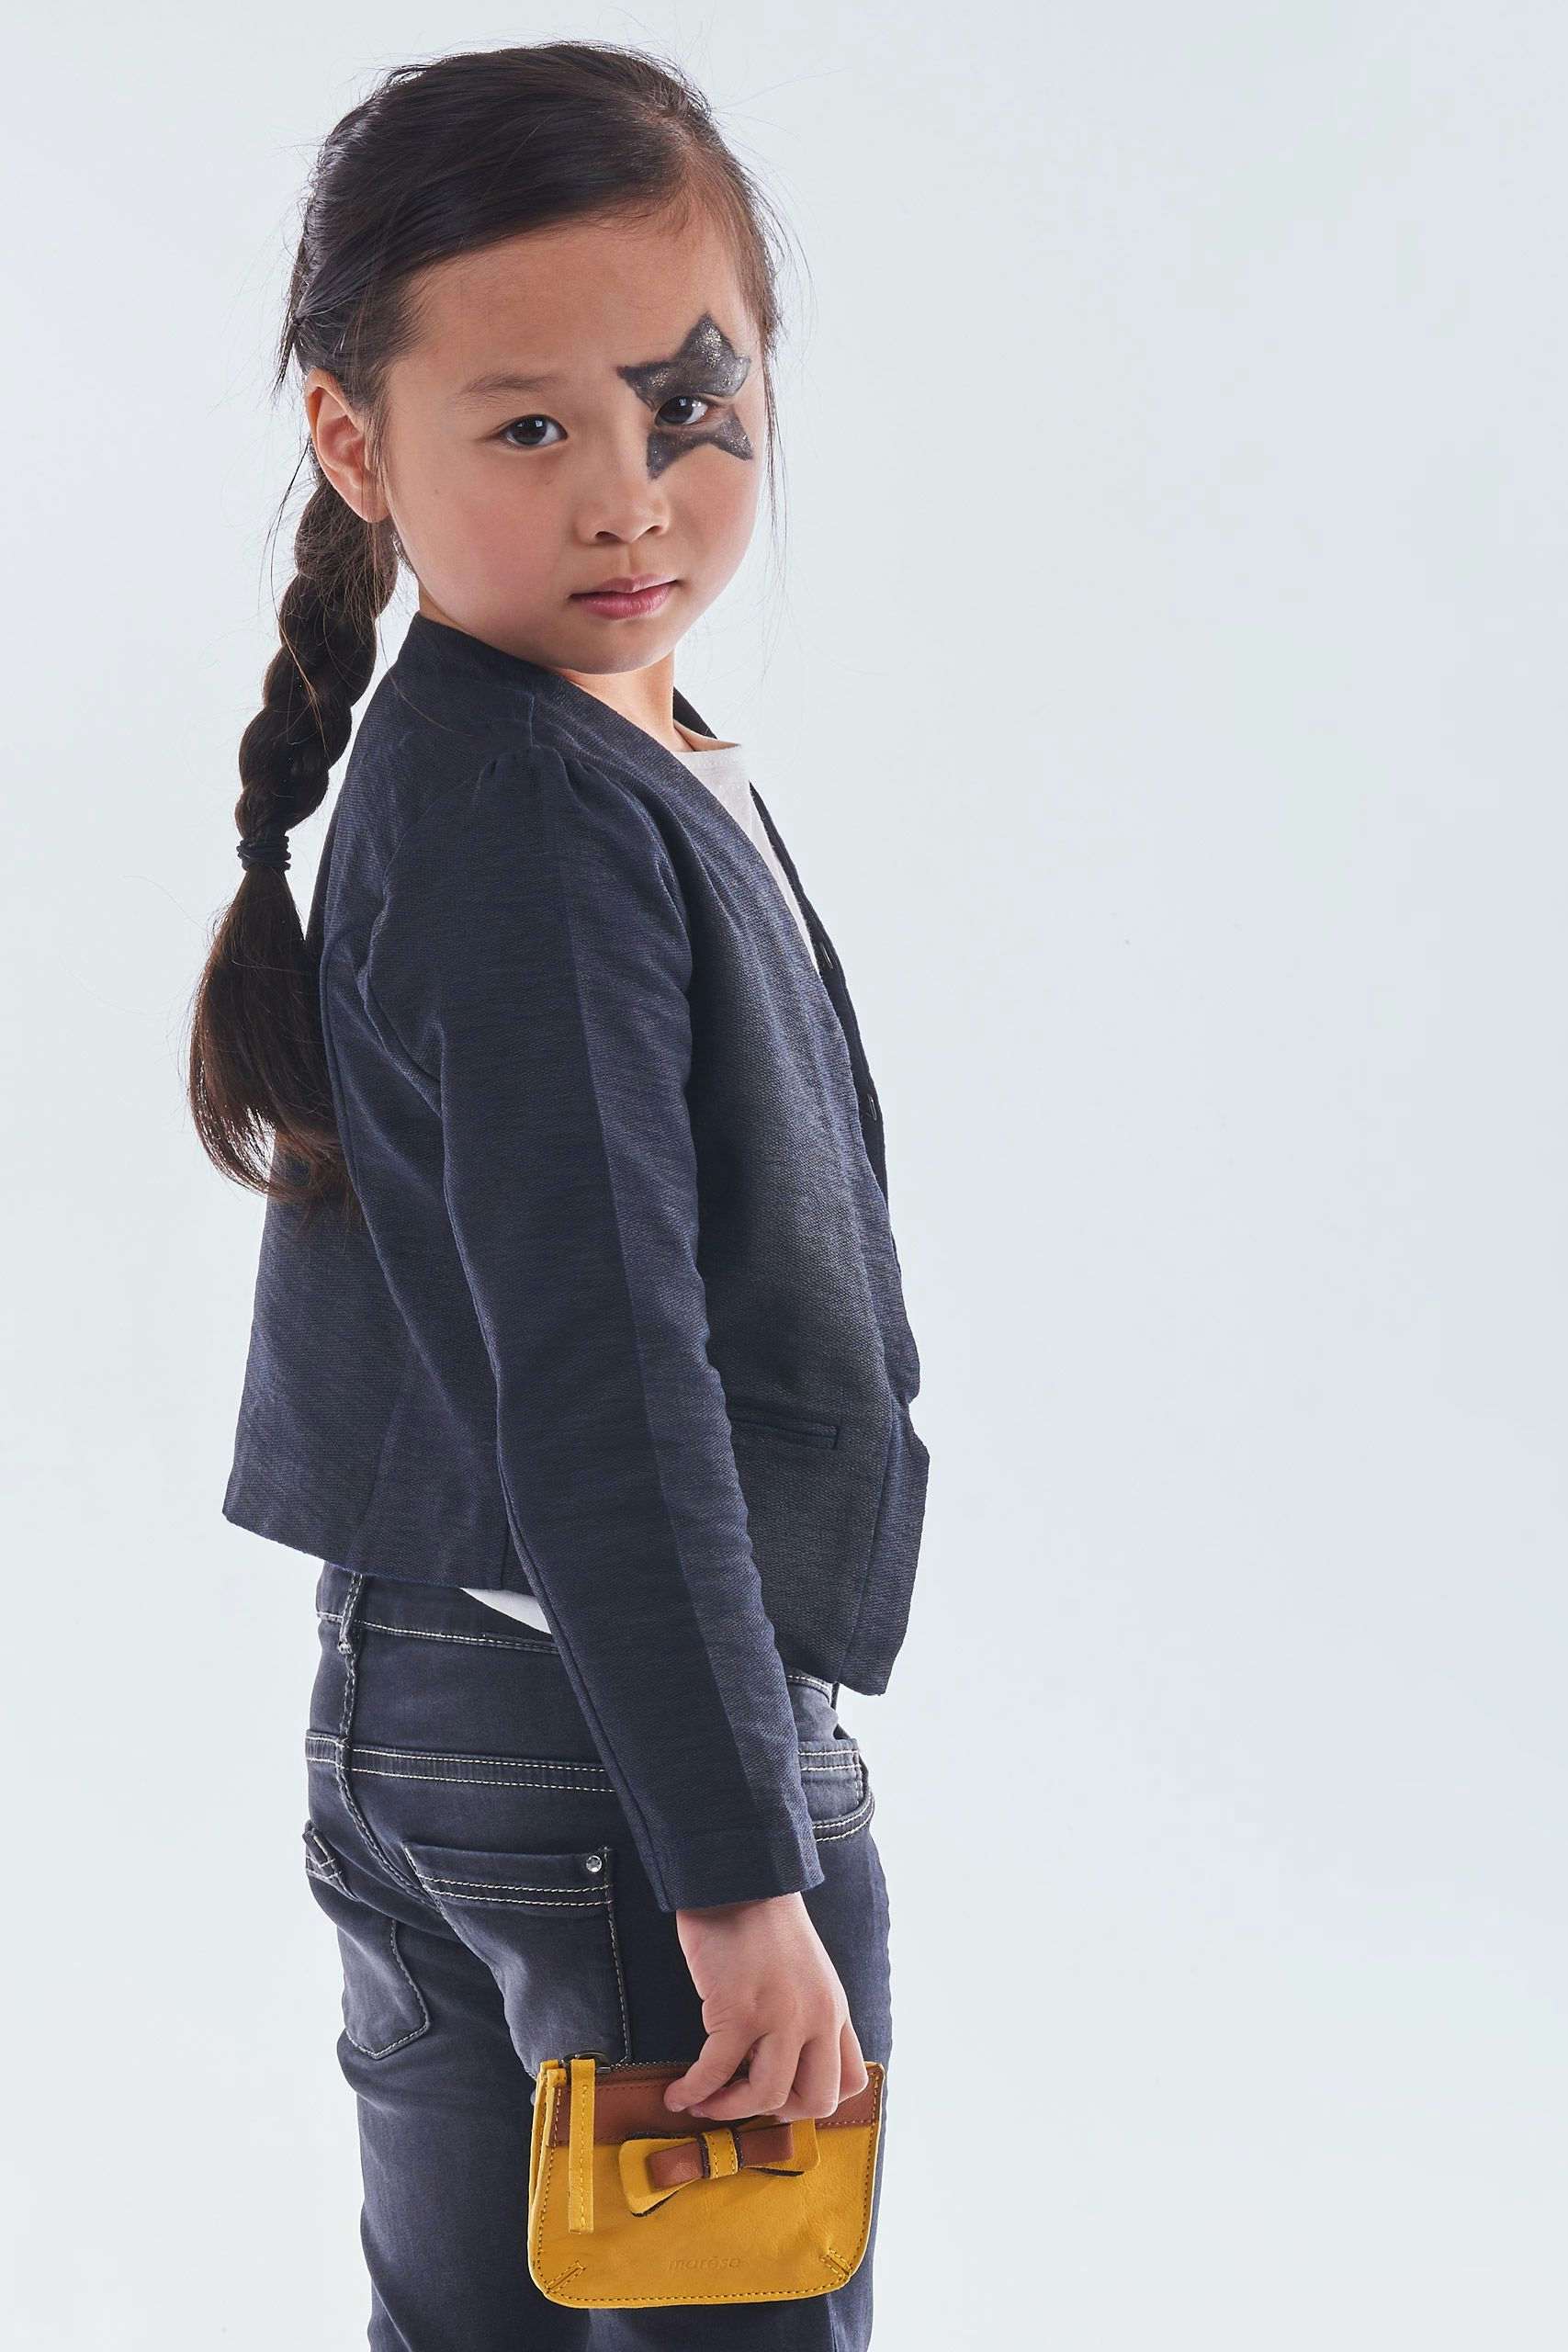 Model Zoe wearing Marese for BigBen Kids. Photographer: Xavier Wendling